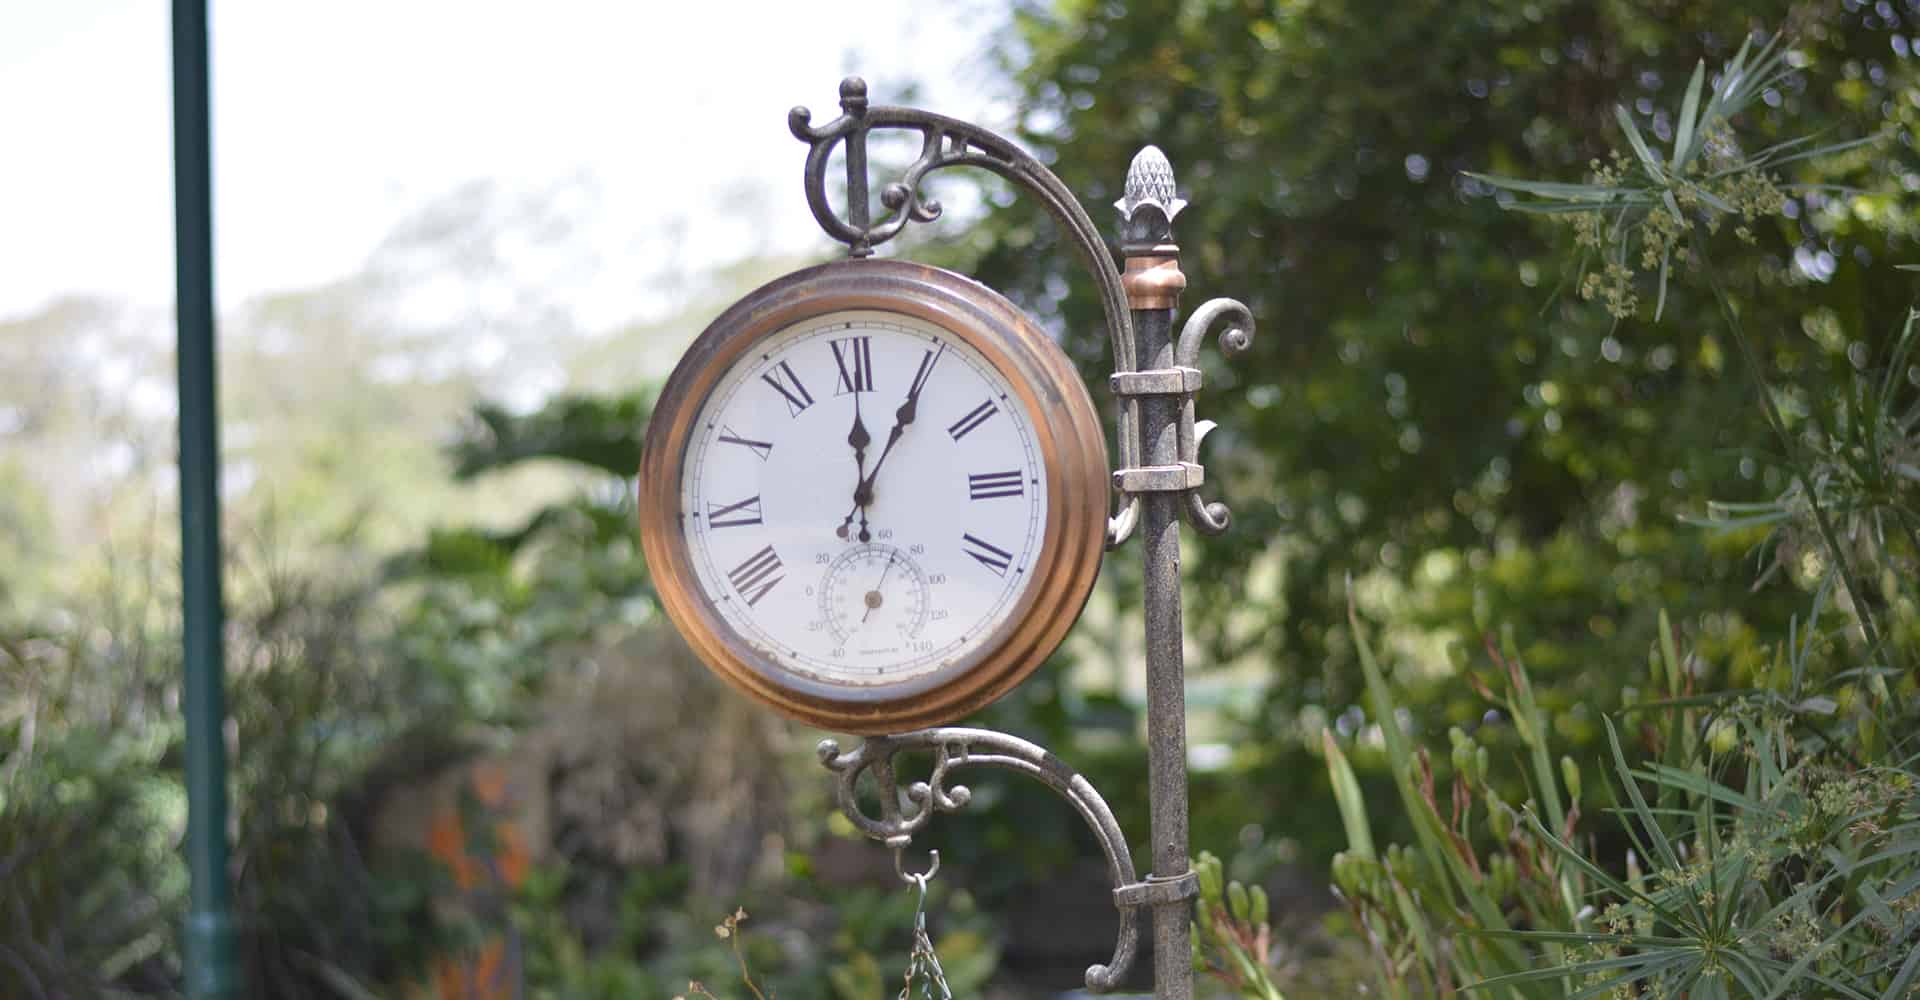 10 Best Garden Clocks That Add Real Character! (Jul 2020 